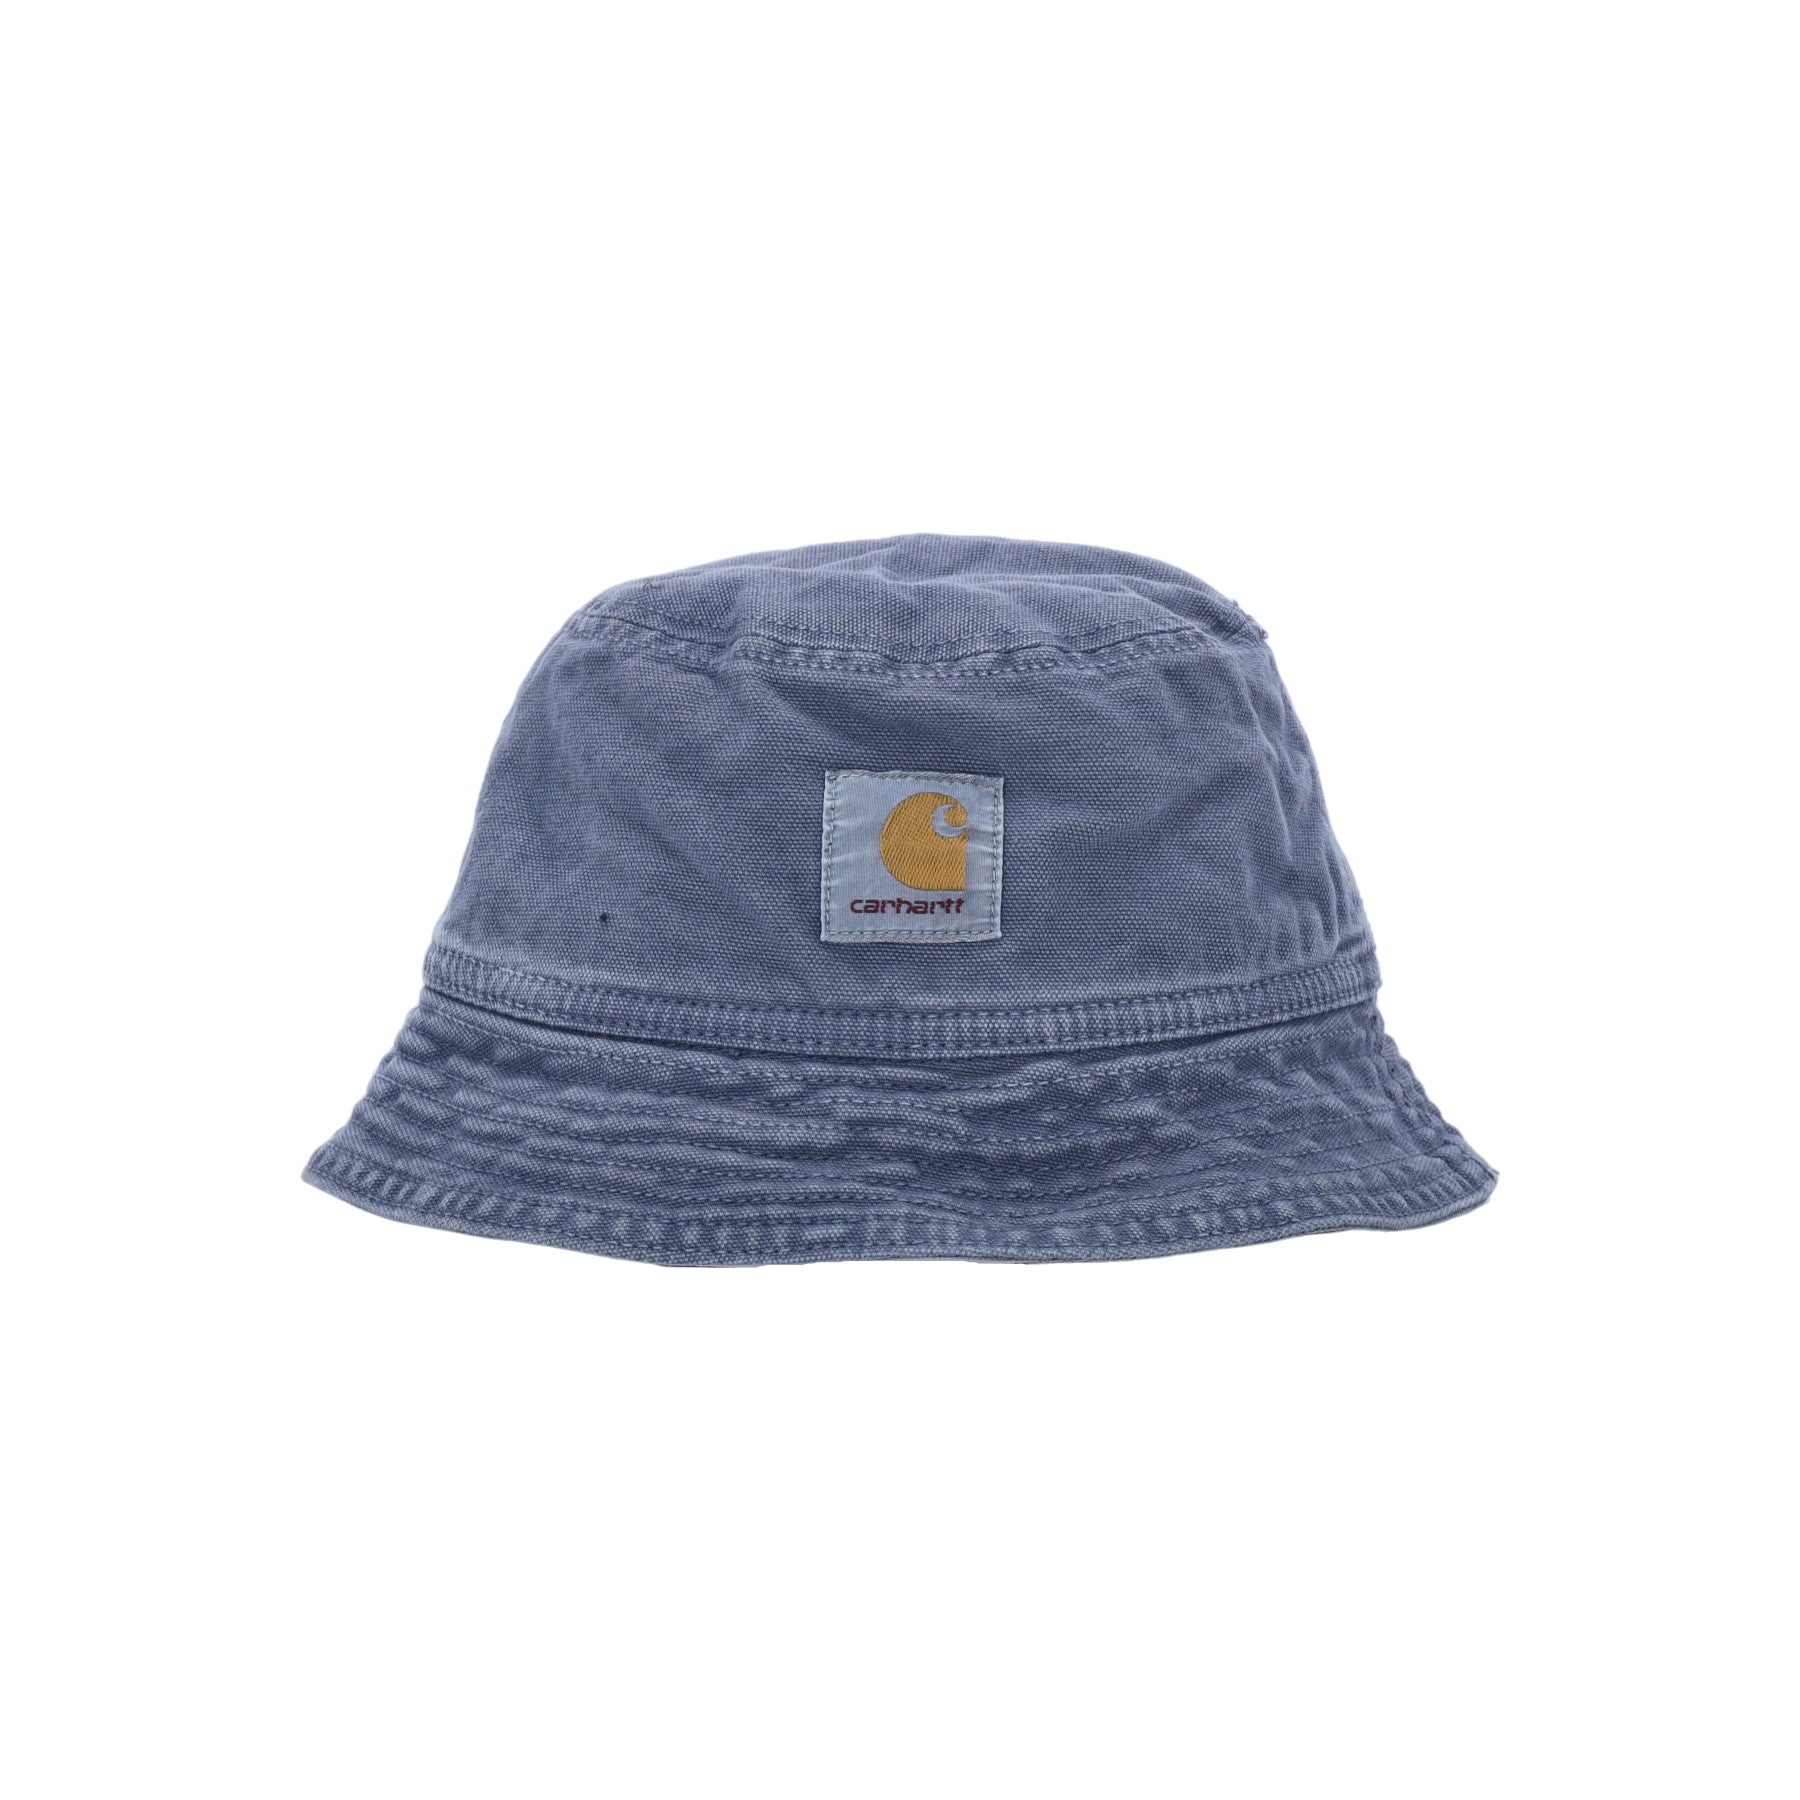 Carhartt Wip, Cappello Da Pescatore Uomo Bayfield Bucket Hat, Storm Blue